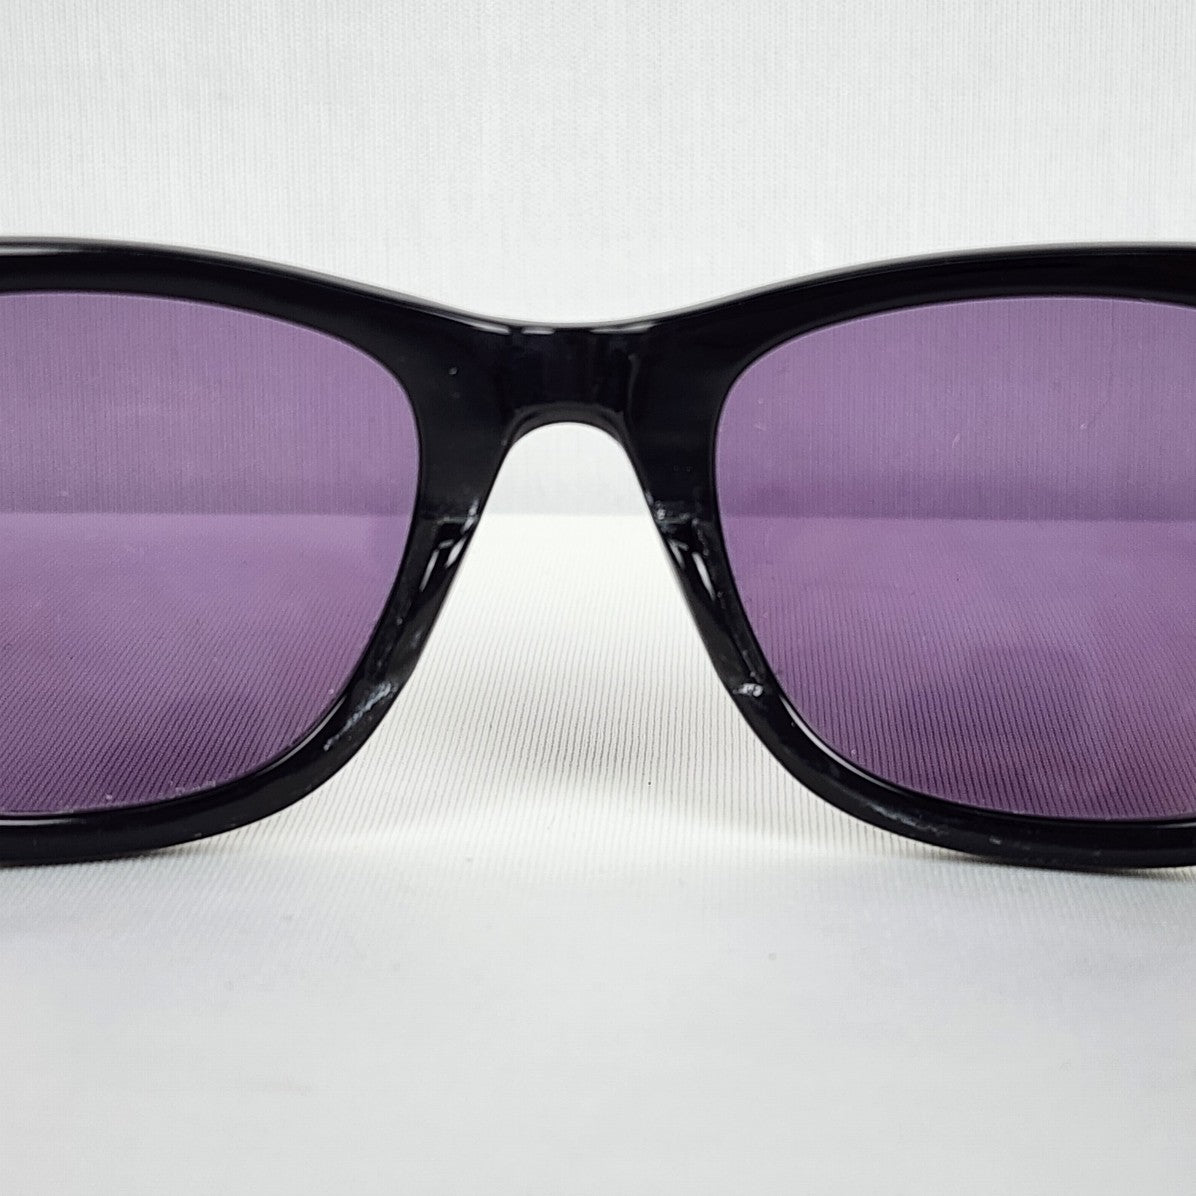 Jimmy Crystal Black Swarovski Crystal Sunglasses